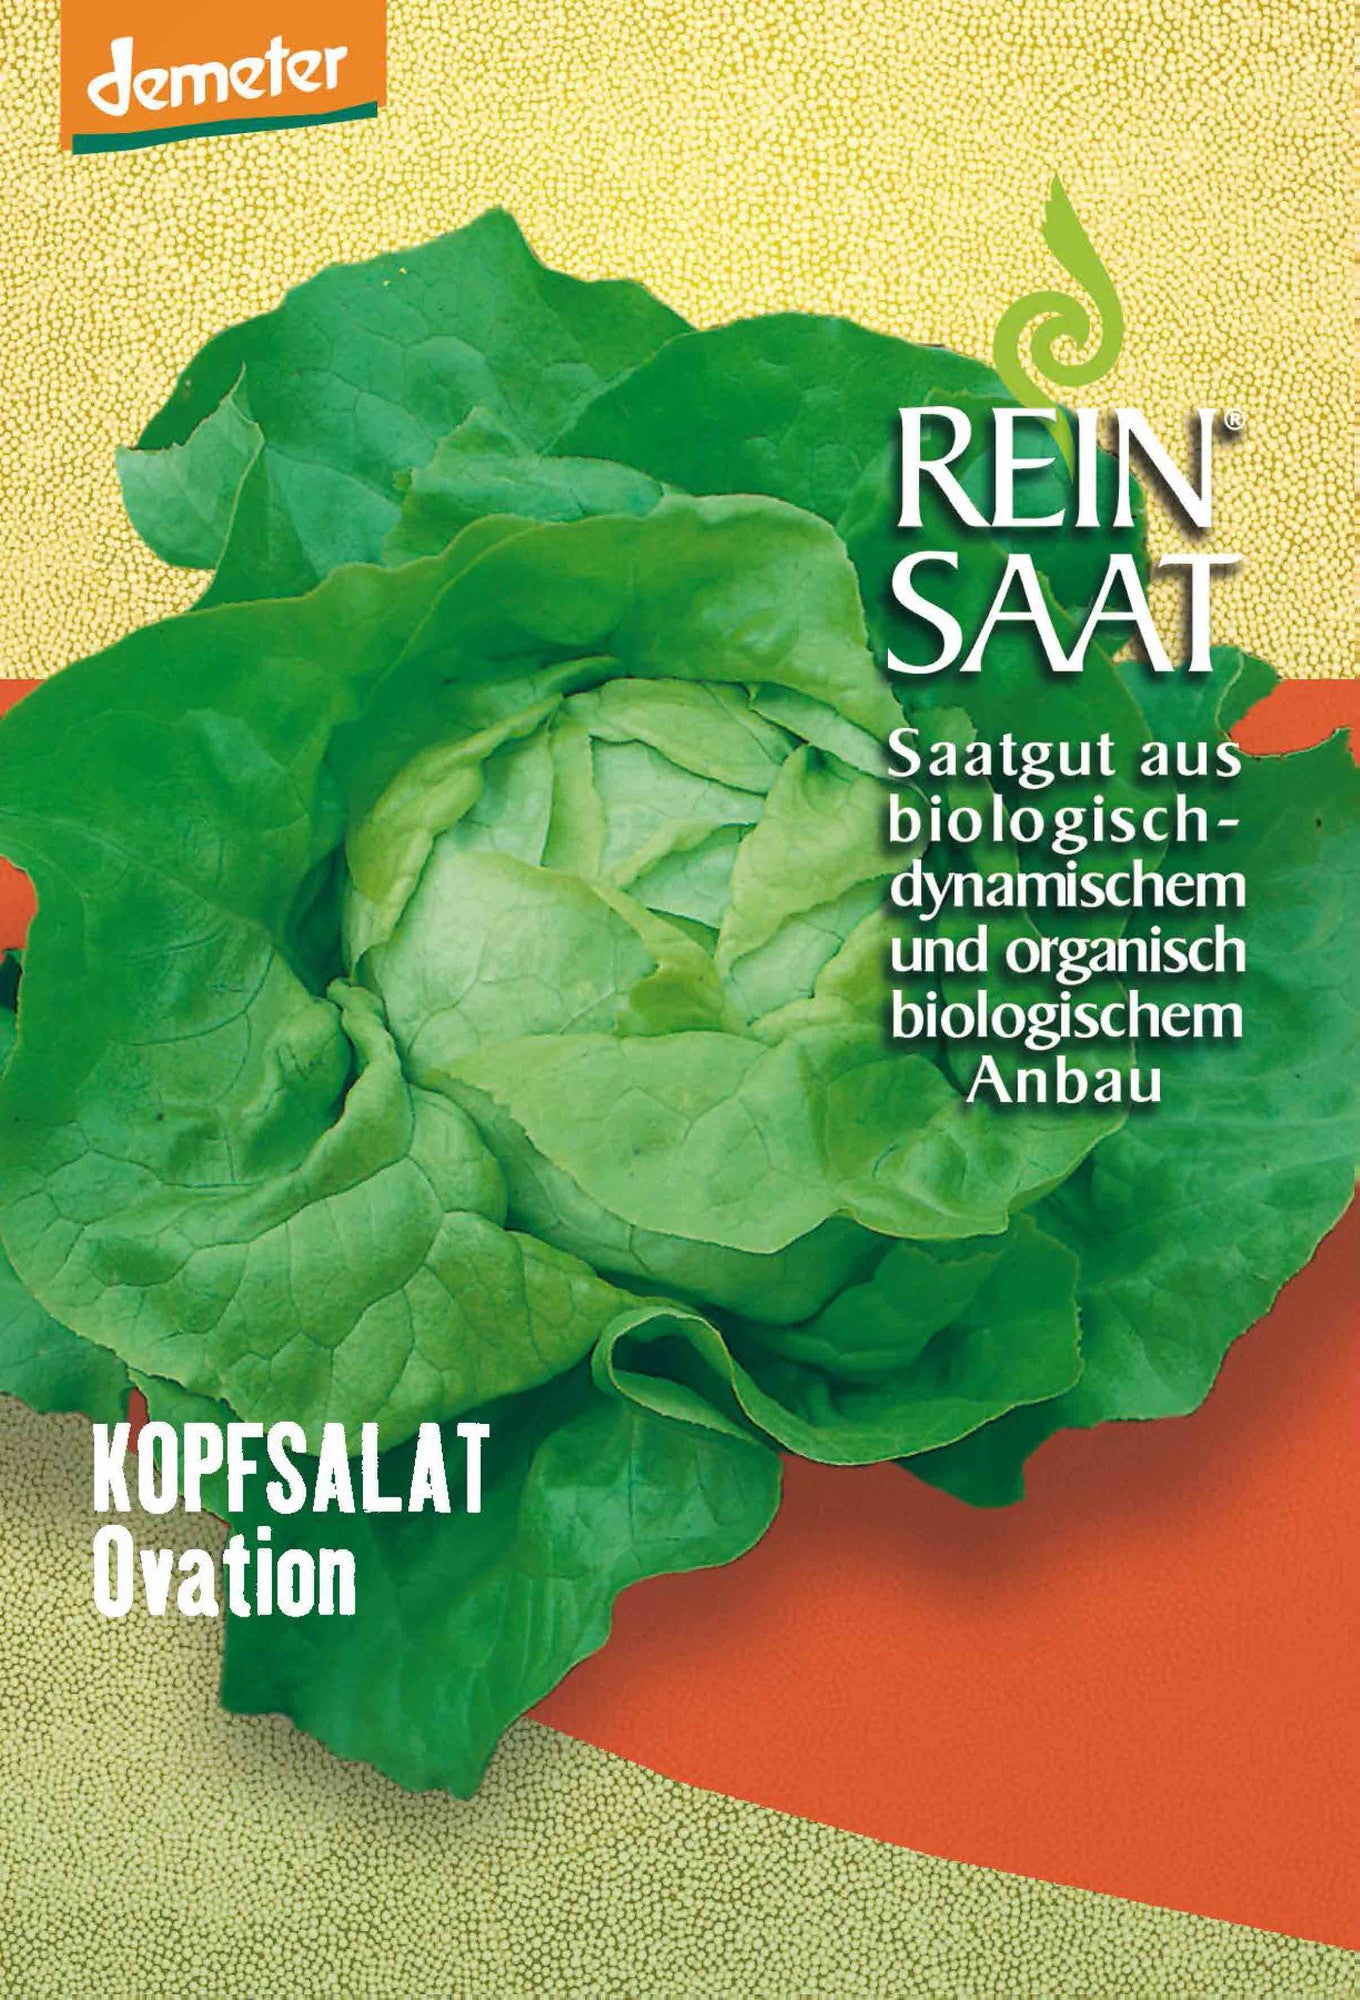 Kopfsalat Ovation | BIO Kopfsalatsamen von Reinsaat